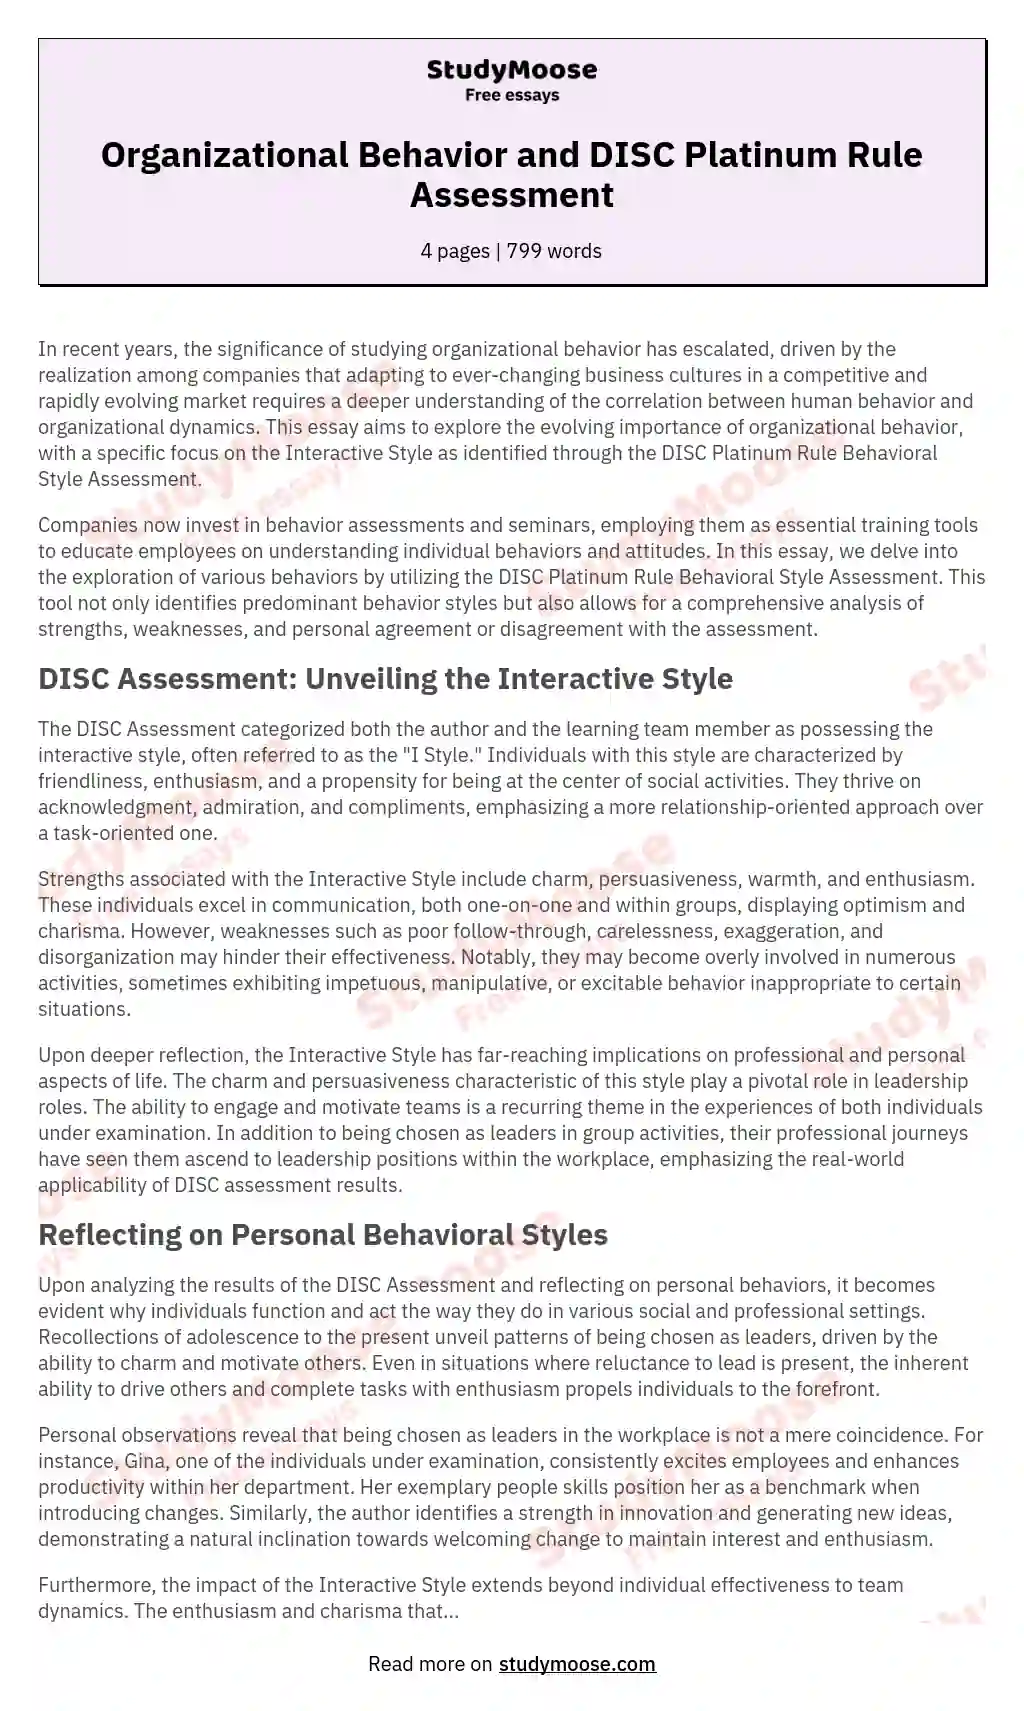 Organizational Behavior and DISC Platinum Rule Assessment essay